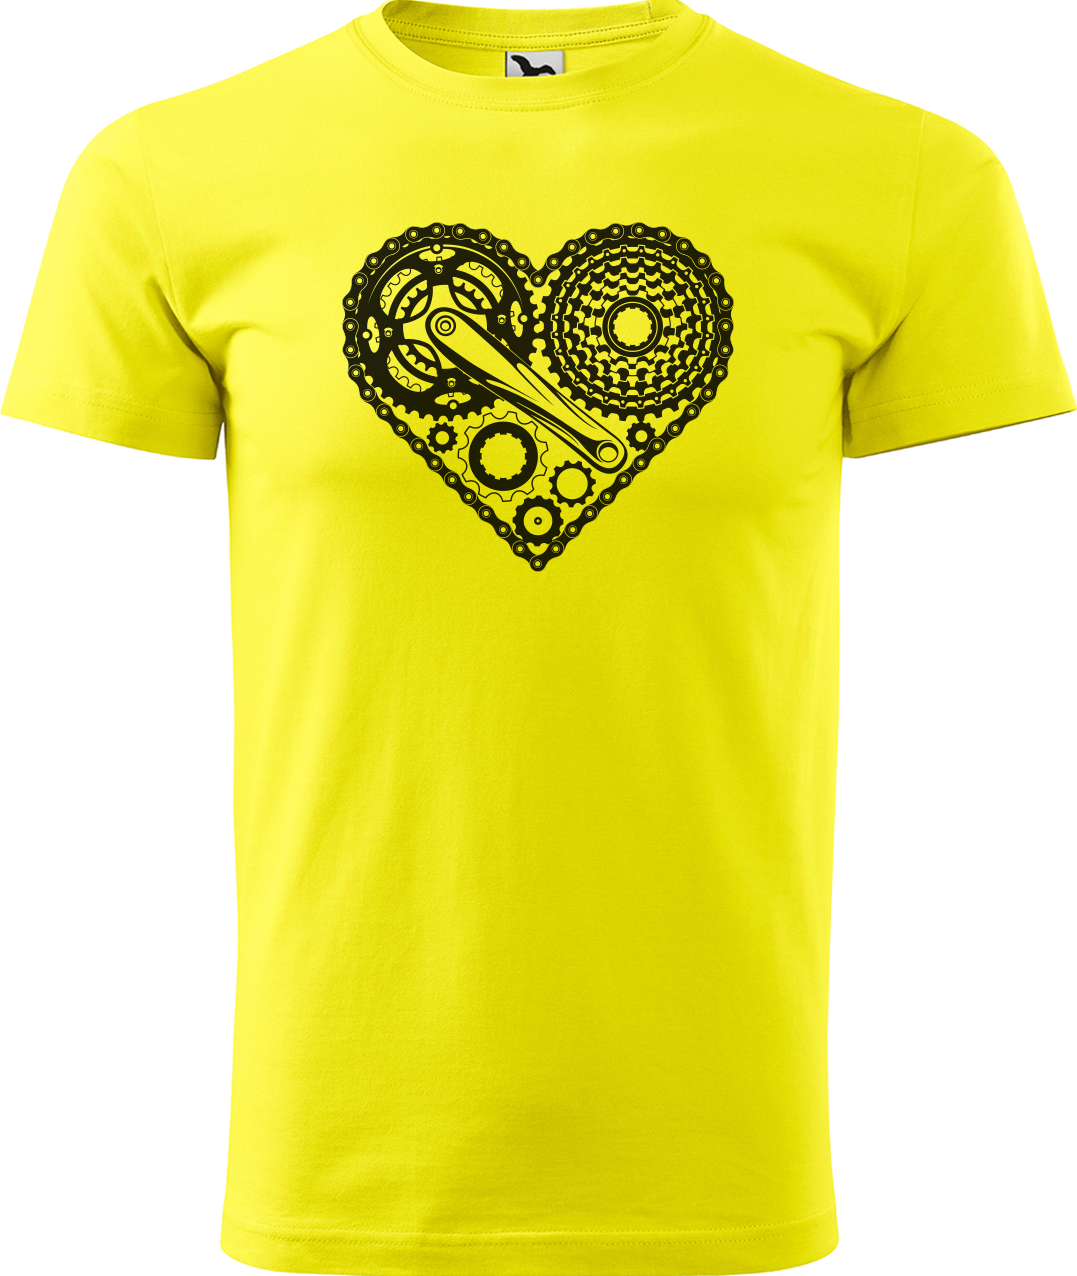 Pánské tričko pro cyklistu - Cyklosrdce Velikost: L, Barva: Žlutá (04)